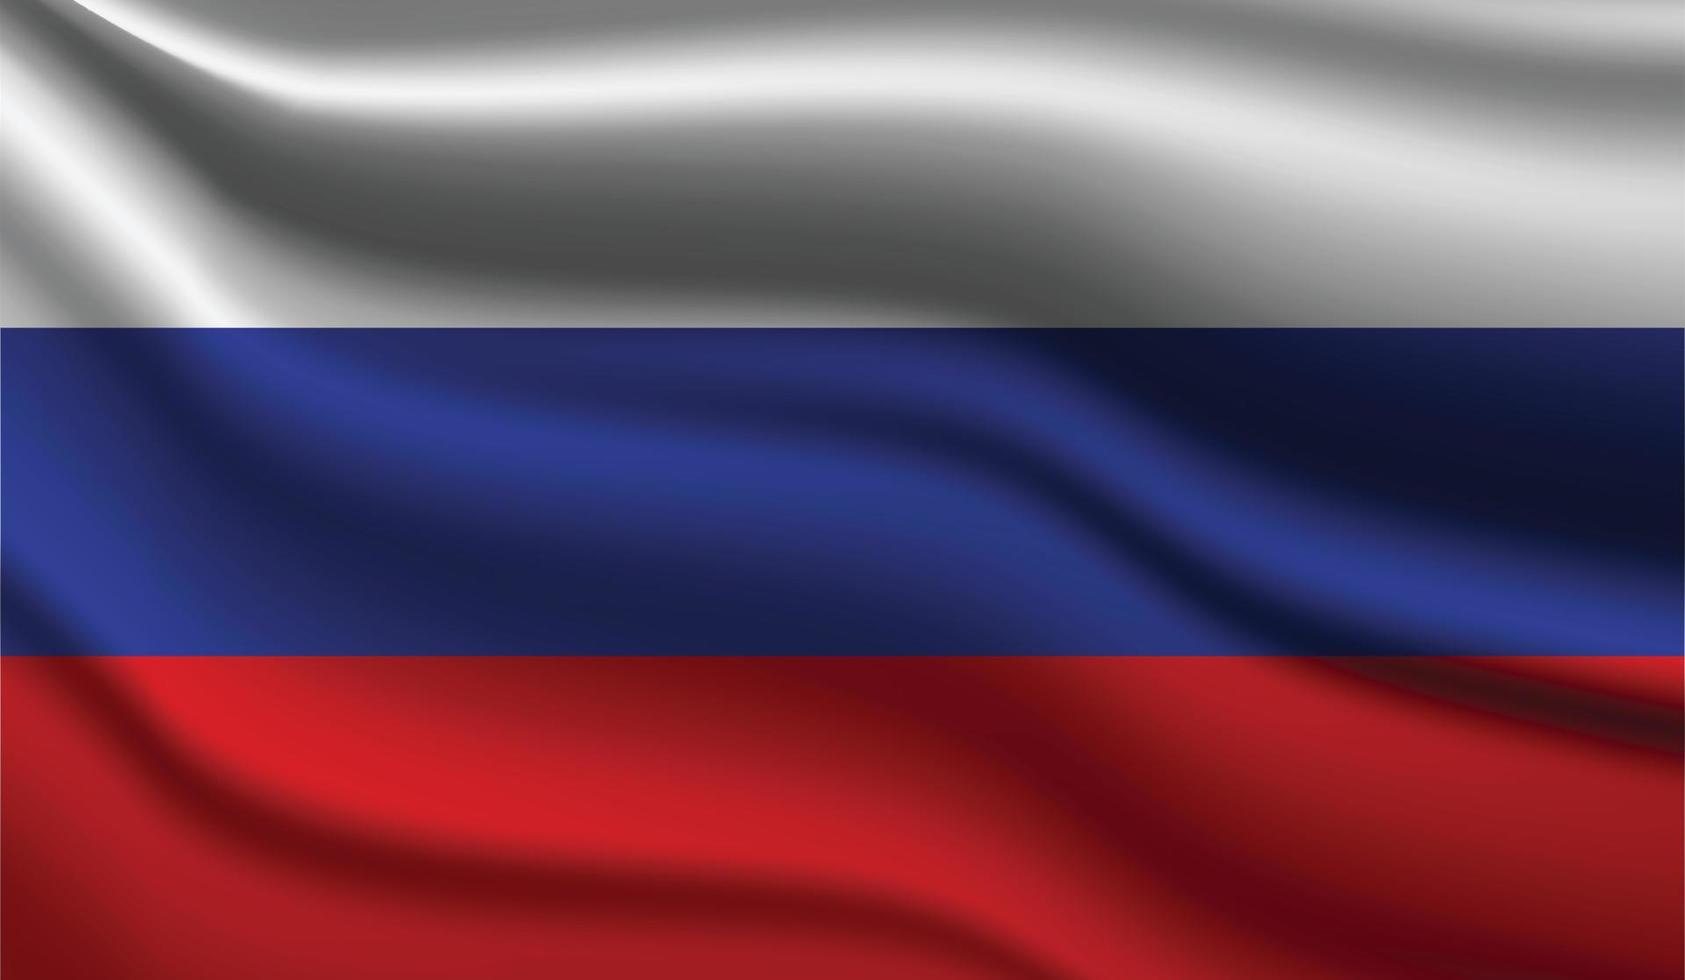 Rusland realistisch modern vlagontwerp vector